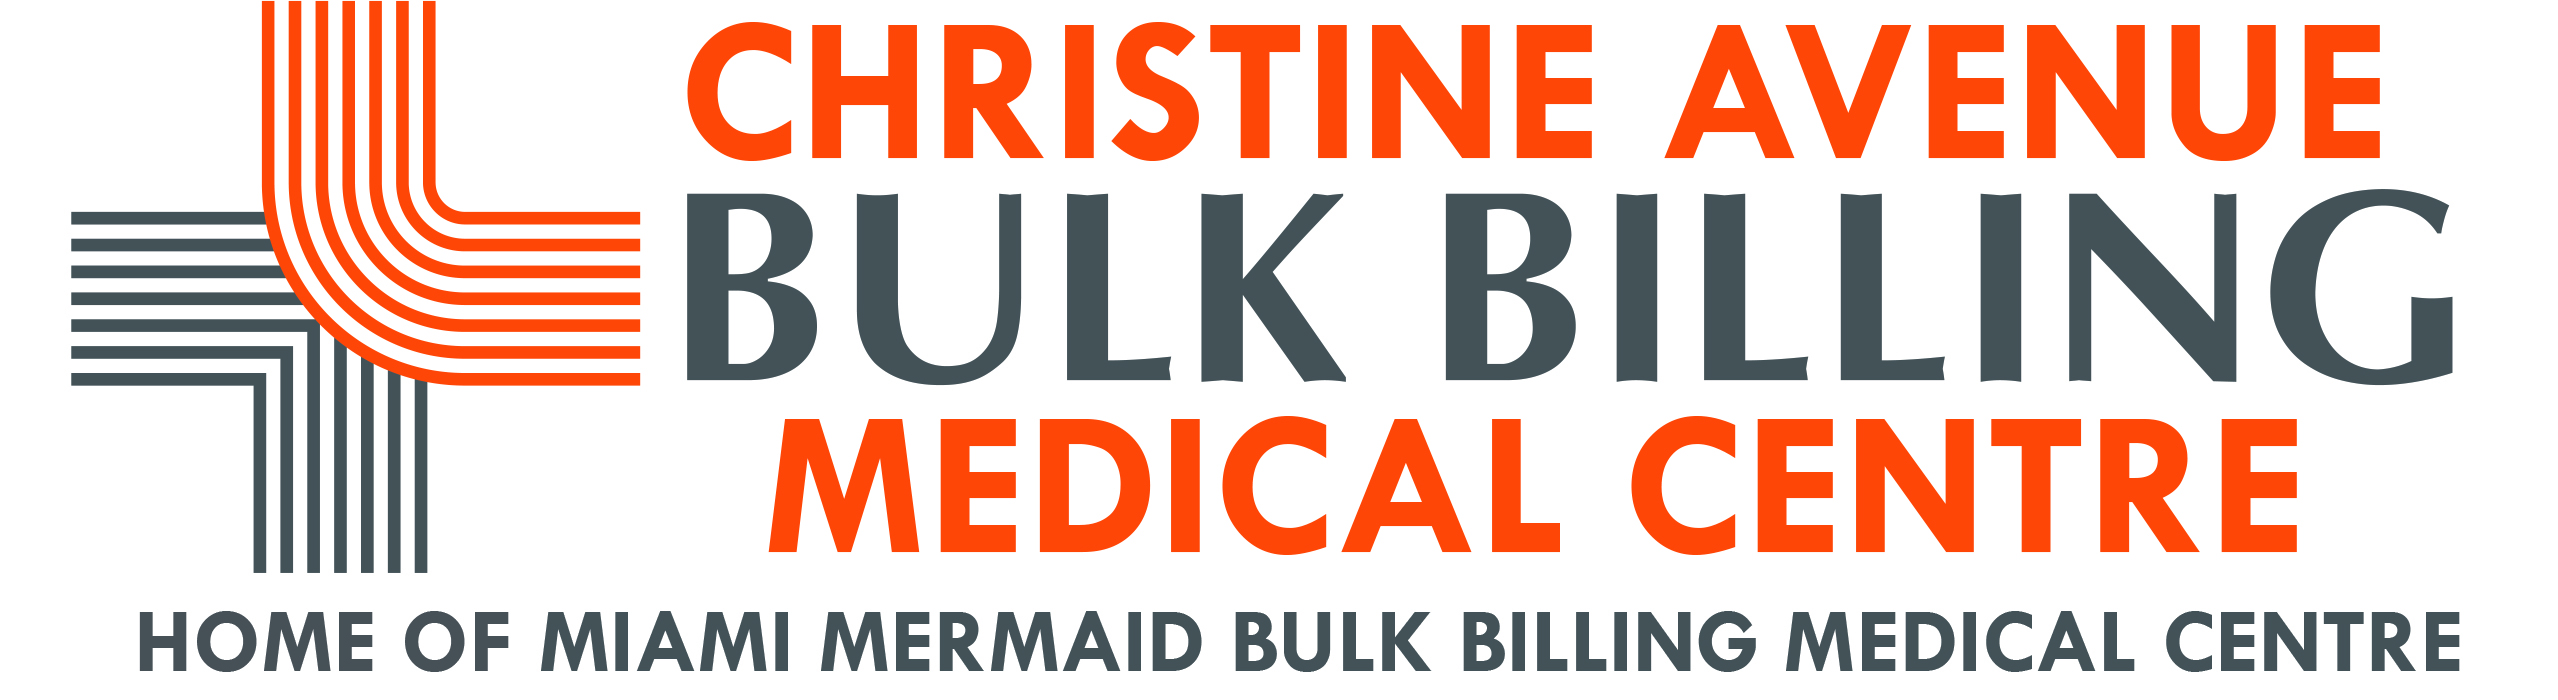 christine ave bulk billing medical centre